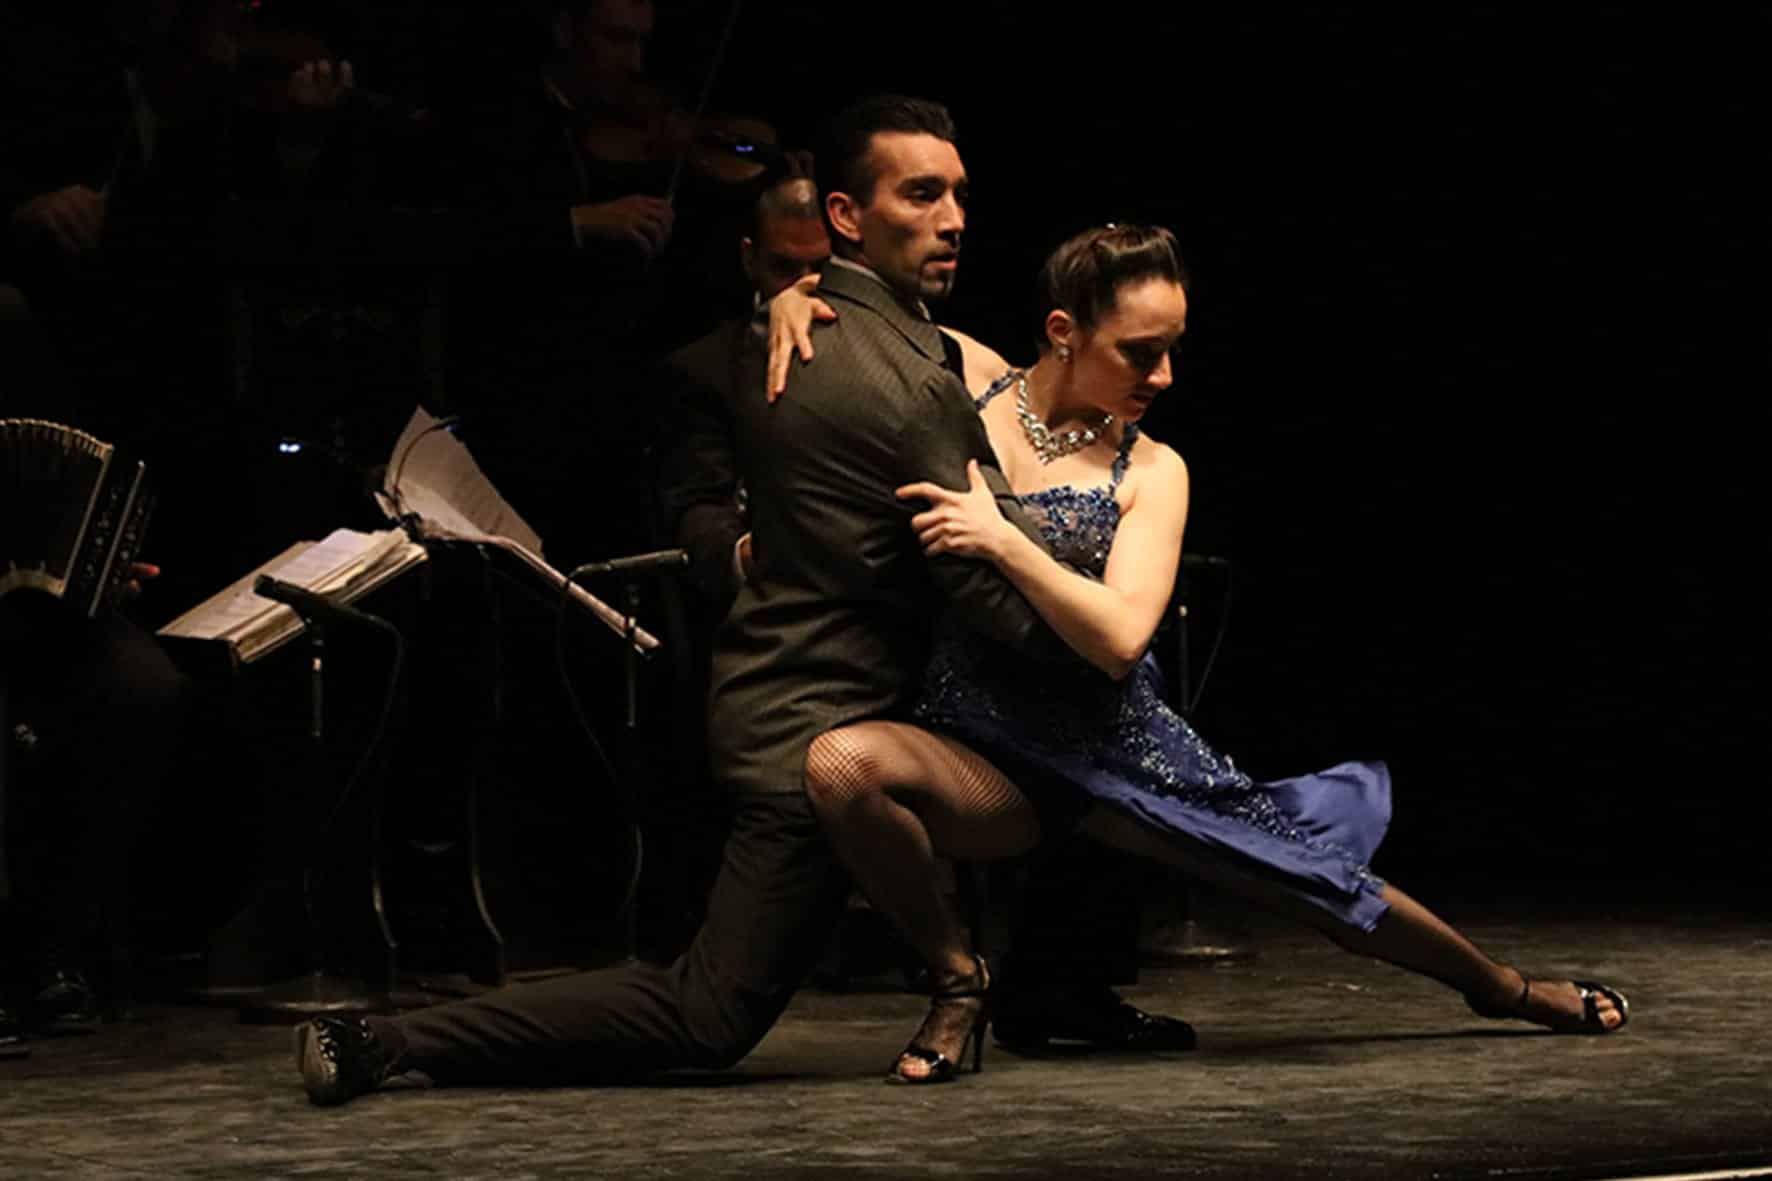 Tango dancers La Ventana Buenos Aires